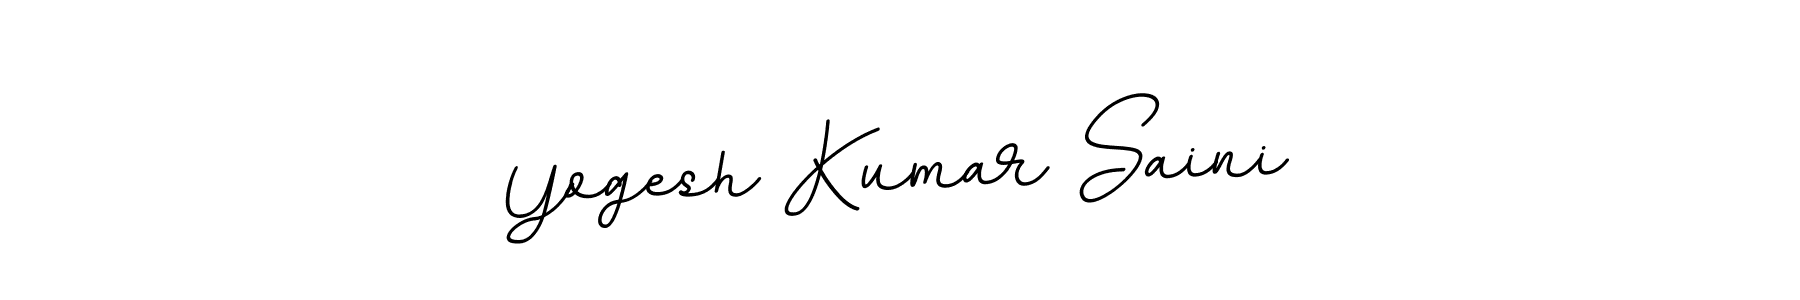 How to Draw Yogesh Kumar Saini signature style? BallpointsItalic-DORy9 is a latest design signature styles for name Yogesh Kumar Saini. Yogesh Kumar Saini signature style 11 images and pictures png